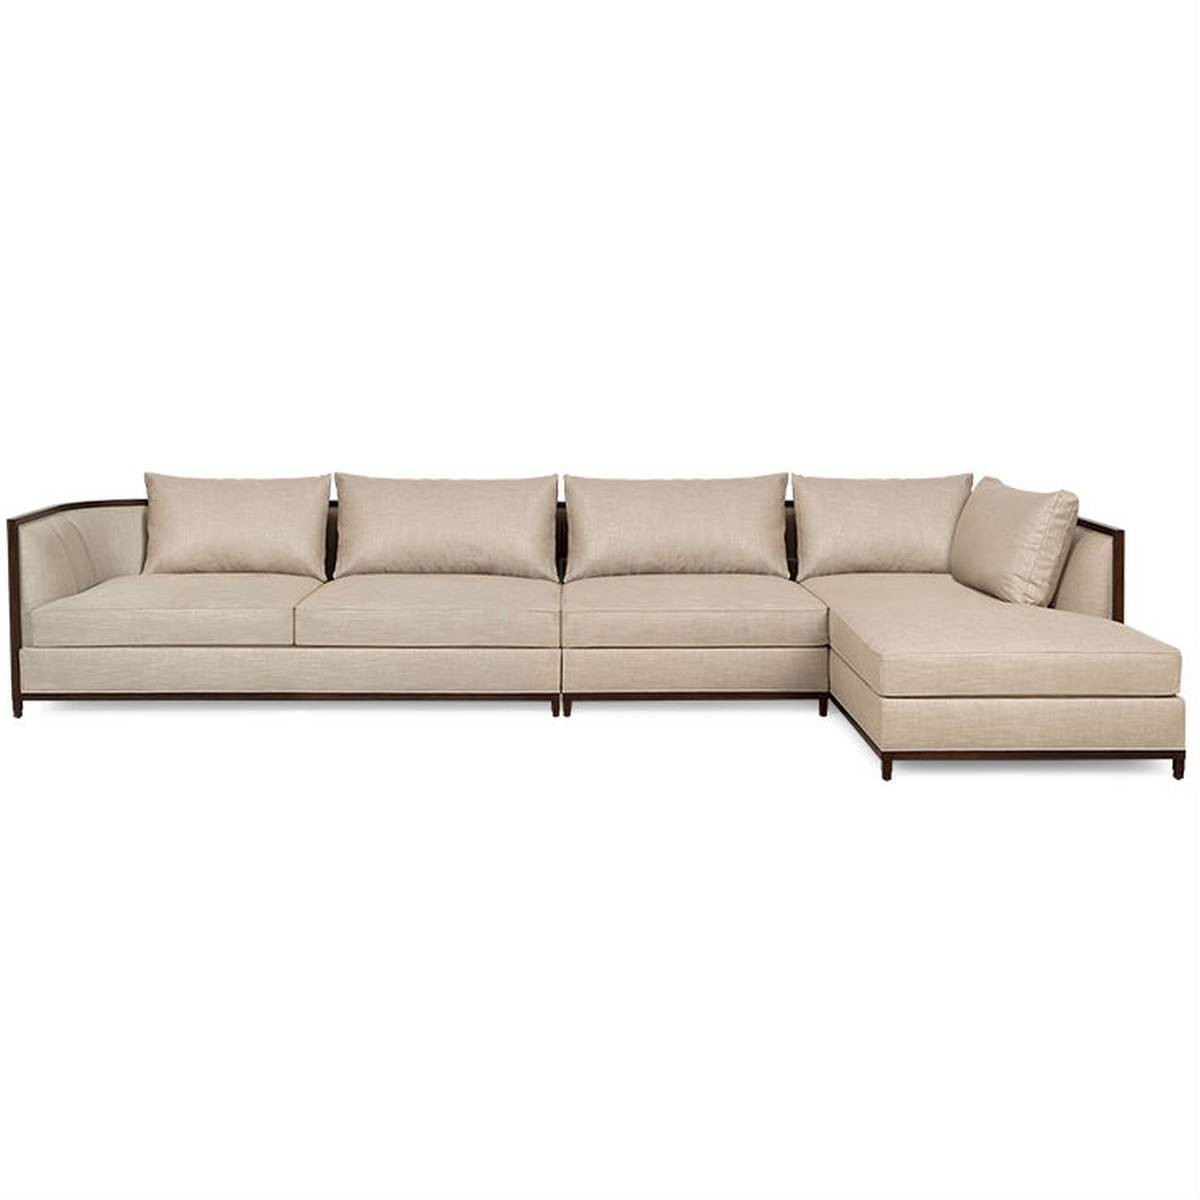 Угловой диван Seurat sofa из США фабрики CHRISTOPHER GUY